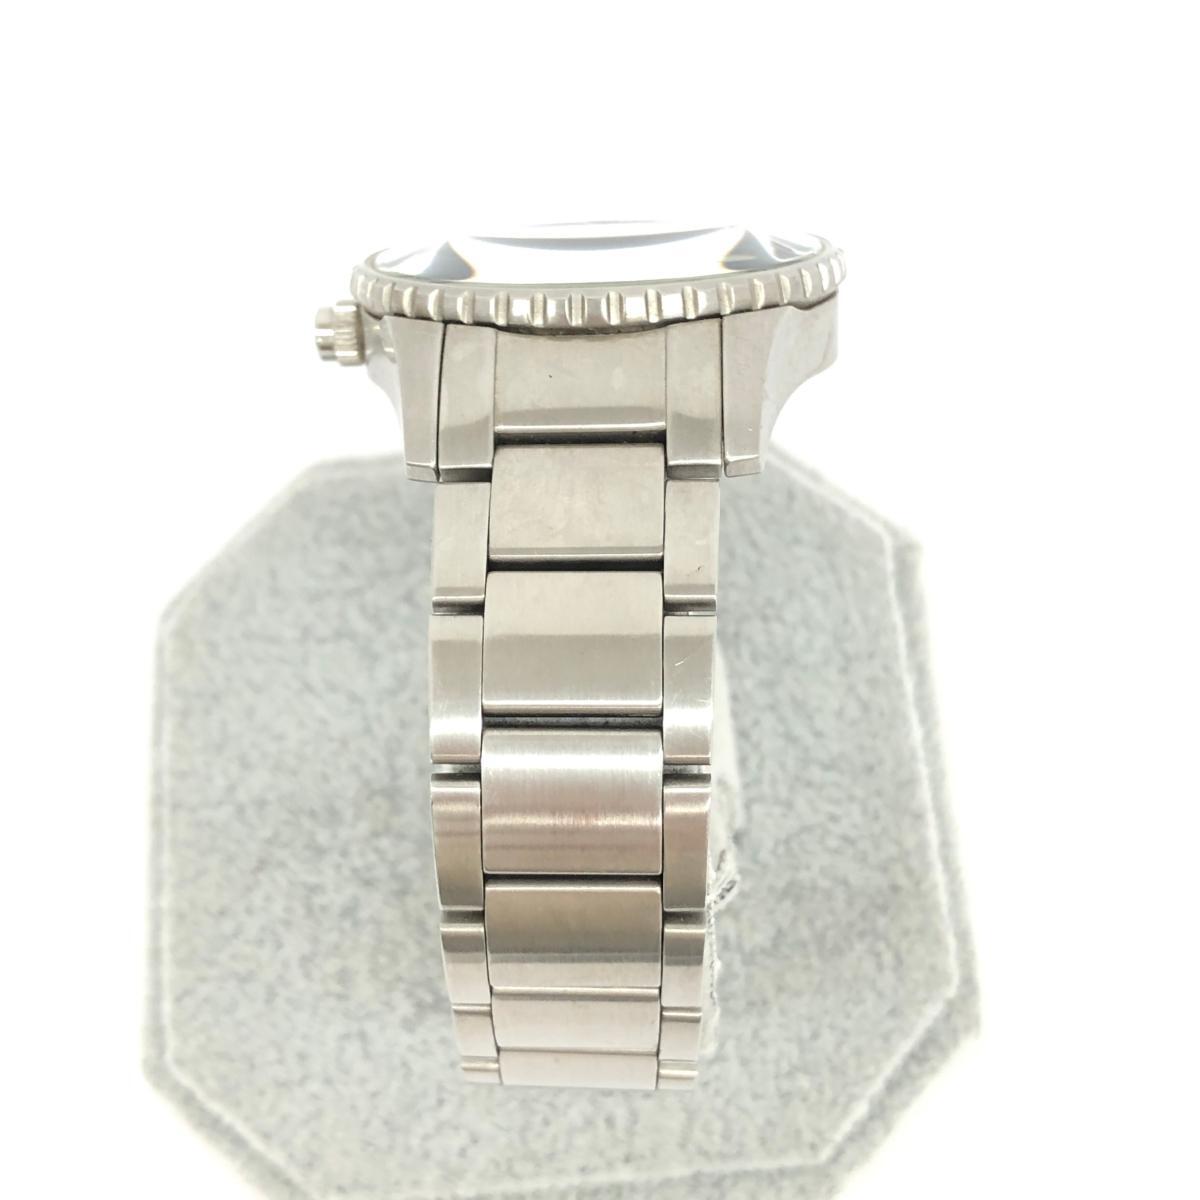 *CALVIN KLEIN Calvin Klein наручные часы кварц *K32111 черный / серебряный цвет SS мужской часы watch